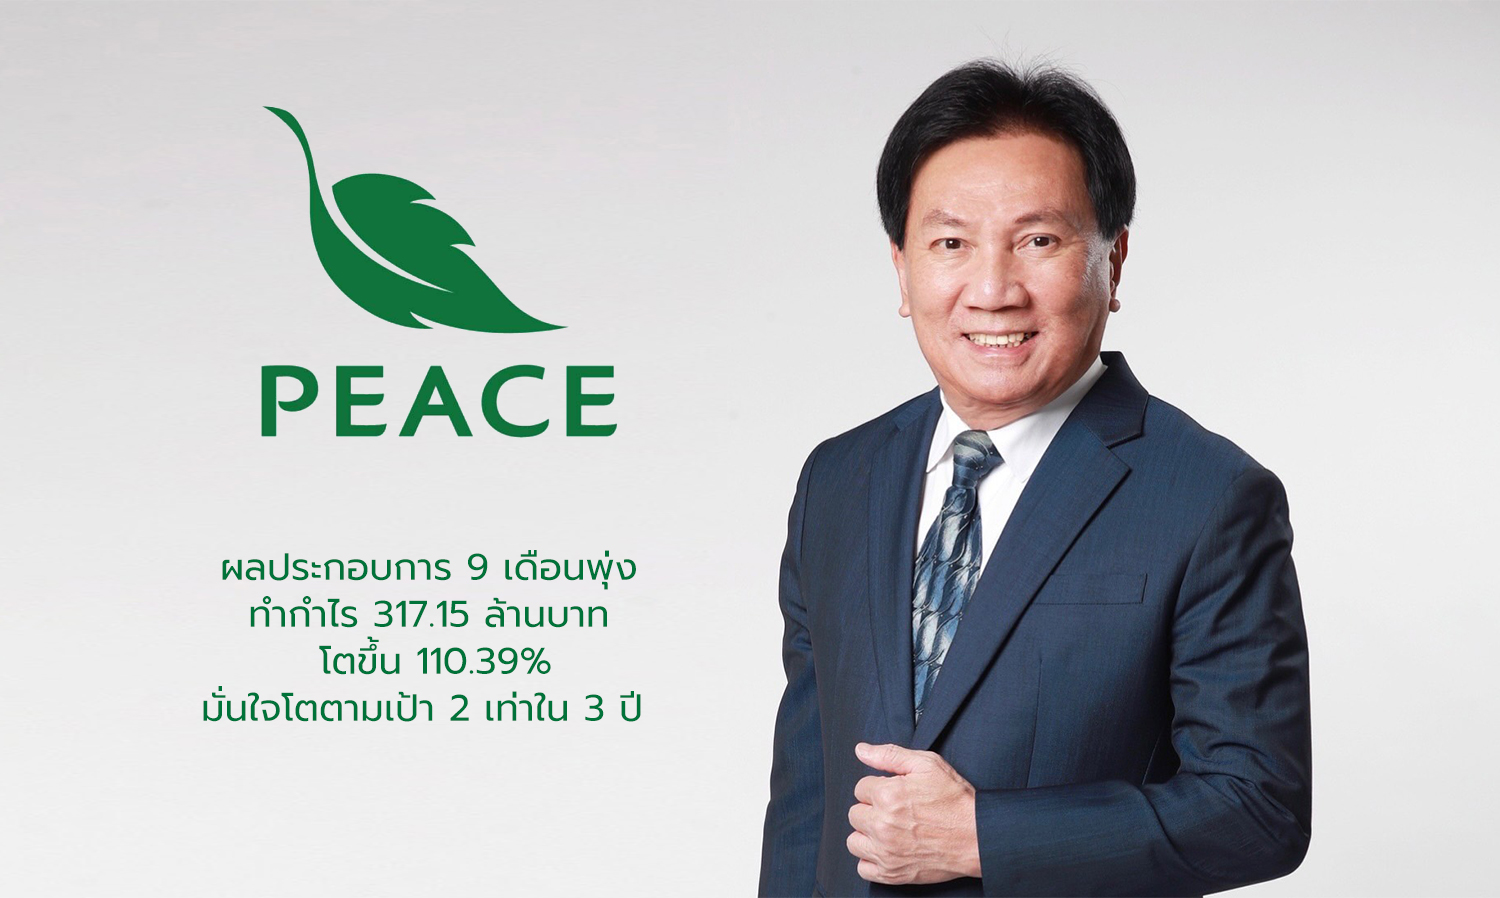 “PEACE” ผลประกอบการ 9 เดือนพุ่ง ทำกำไร 317.15 ล้านบาท โตขึ้น 110.39% มั่นใจโตตามเป้า 2 เท่าใน 3 ปี